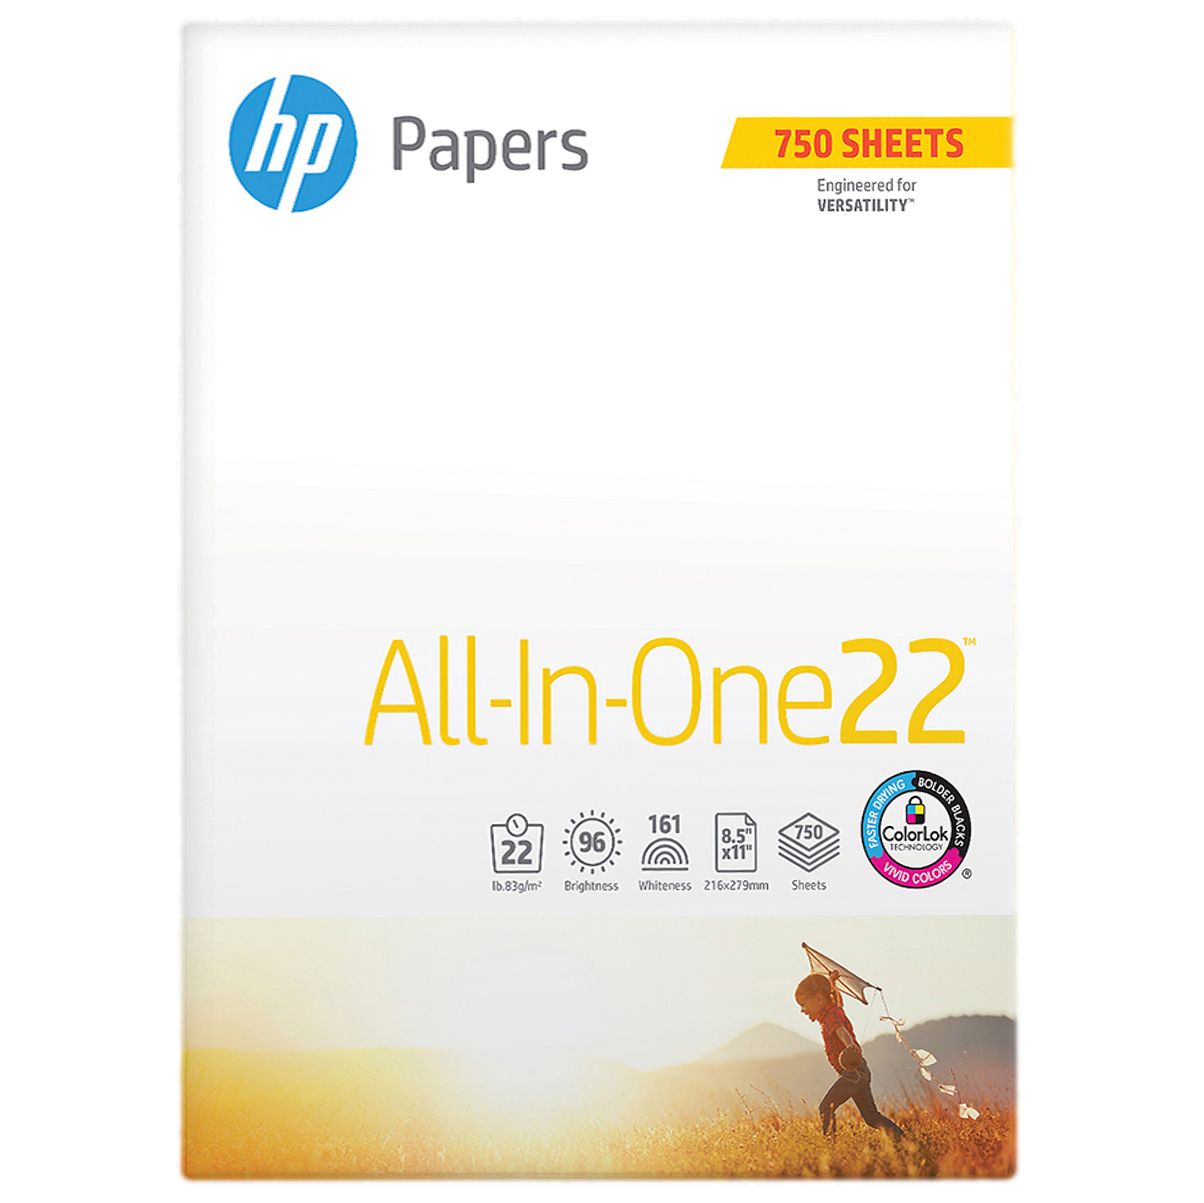 HP Copy&Print20™ - HP Papers